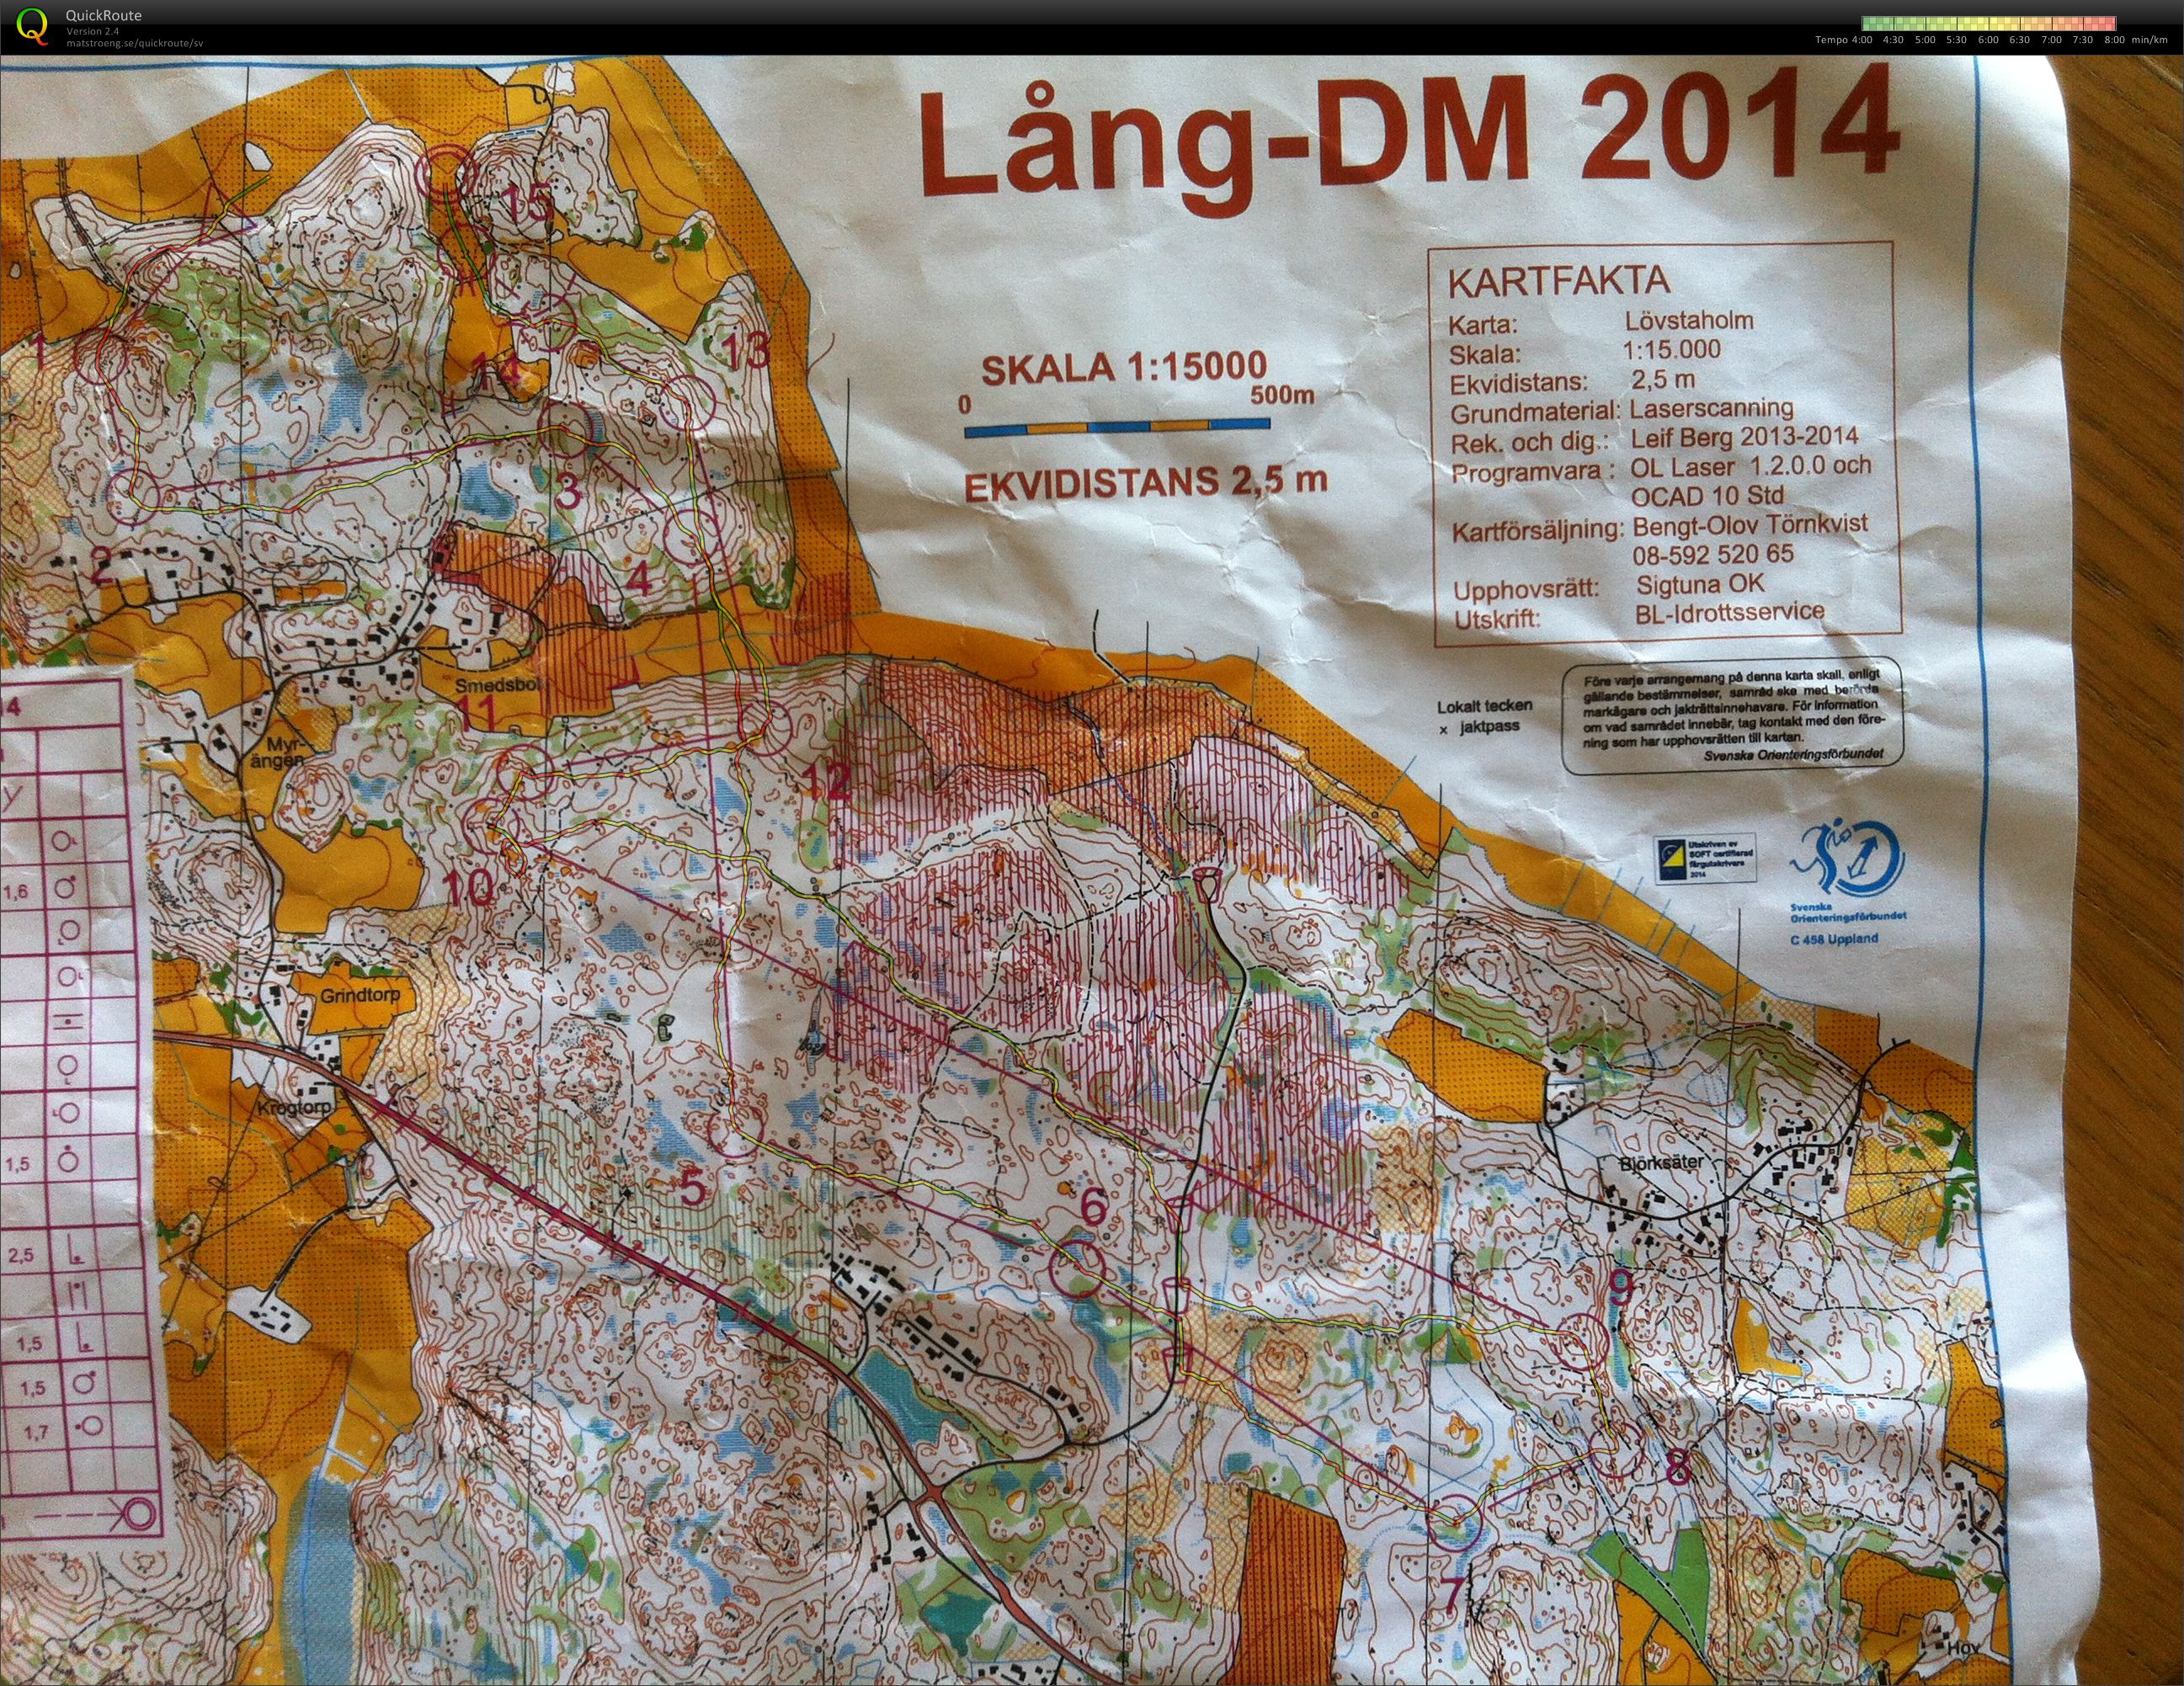 DM lång (06-09-2014)